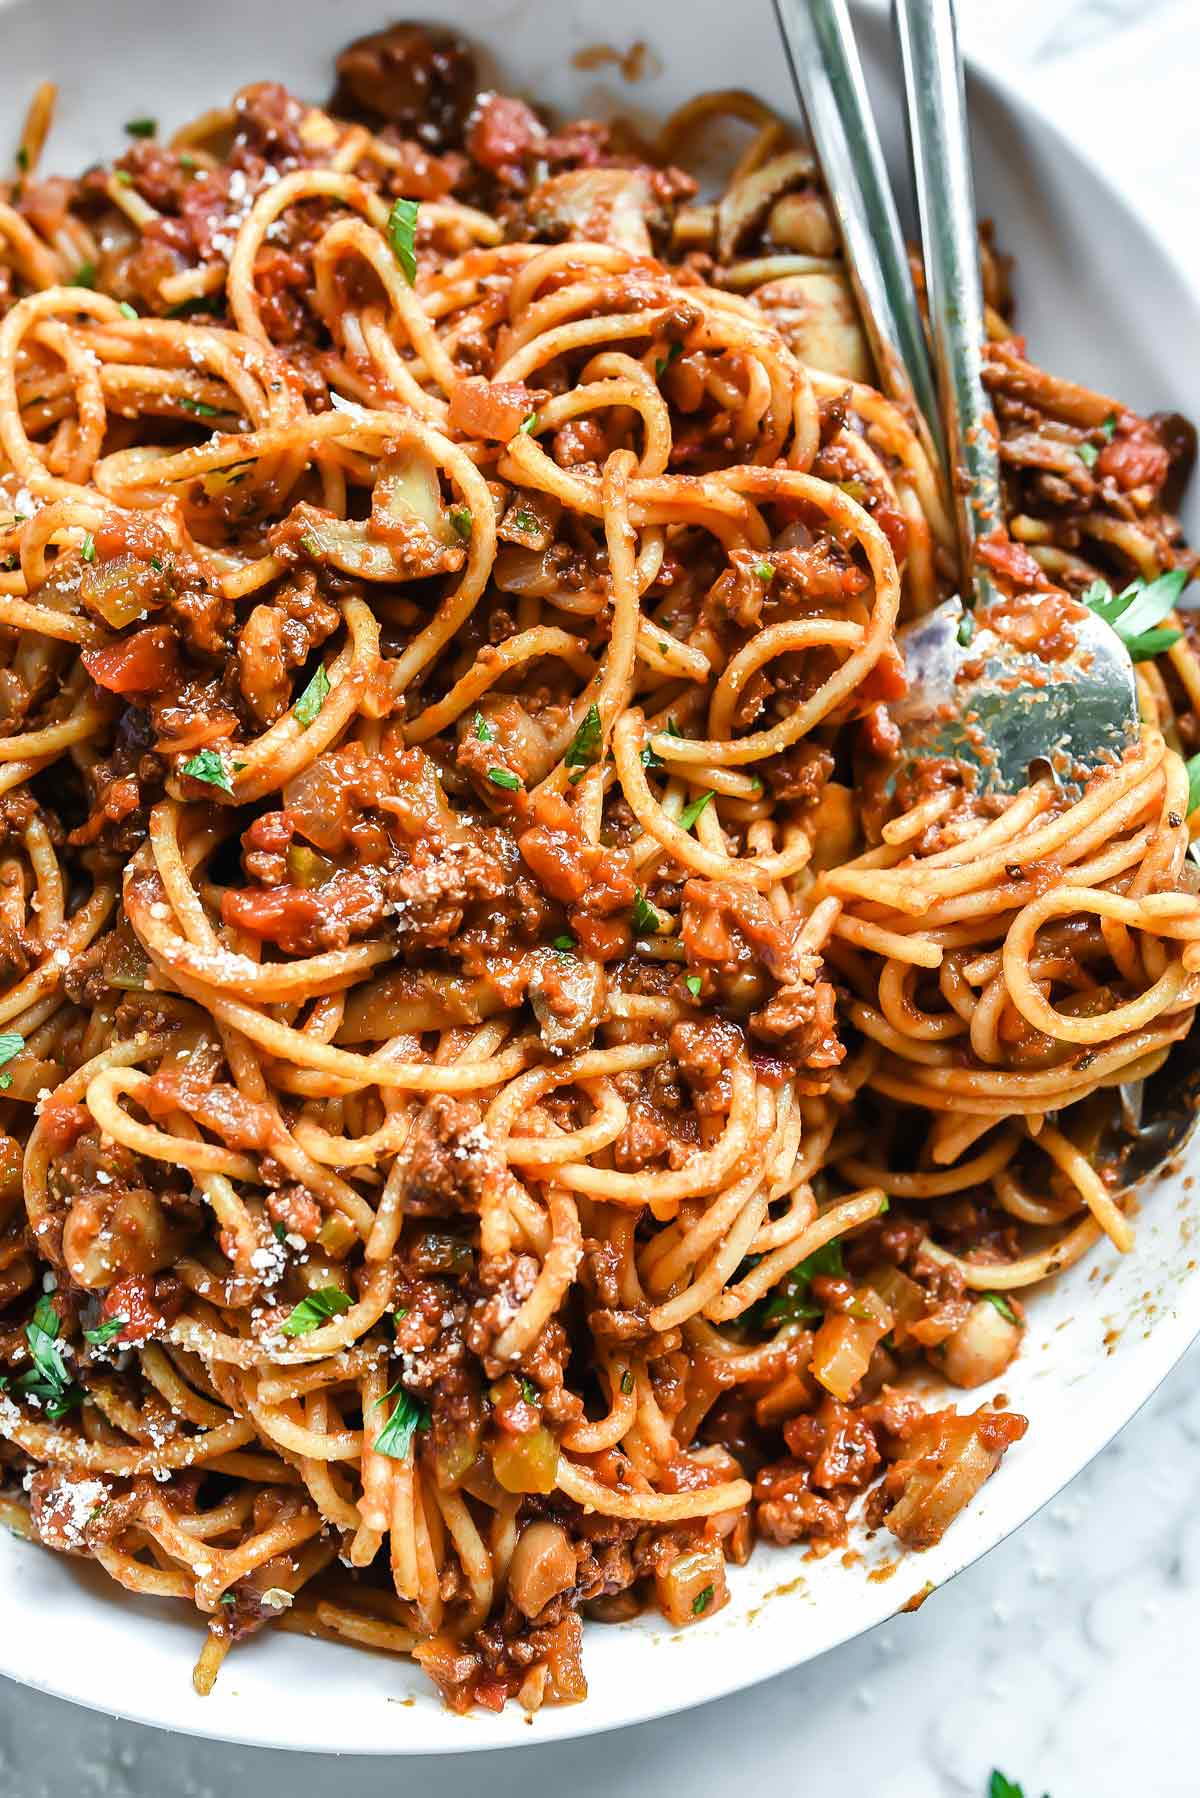 My Mom's Easy Homemade Spaghetti and Meat Sauce | foodiecrush.com #spaghetti #carne #sauce #bolognese #pasta #rece